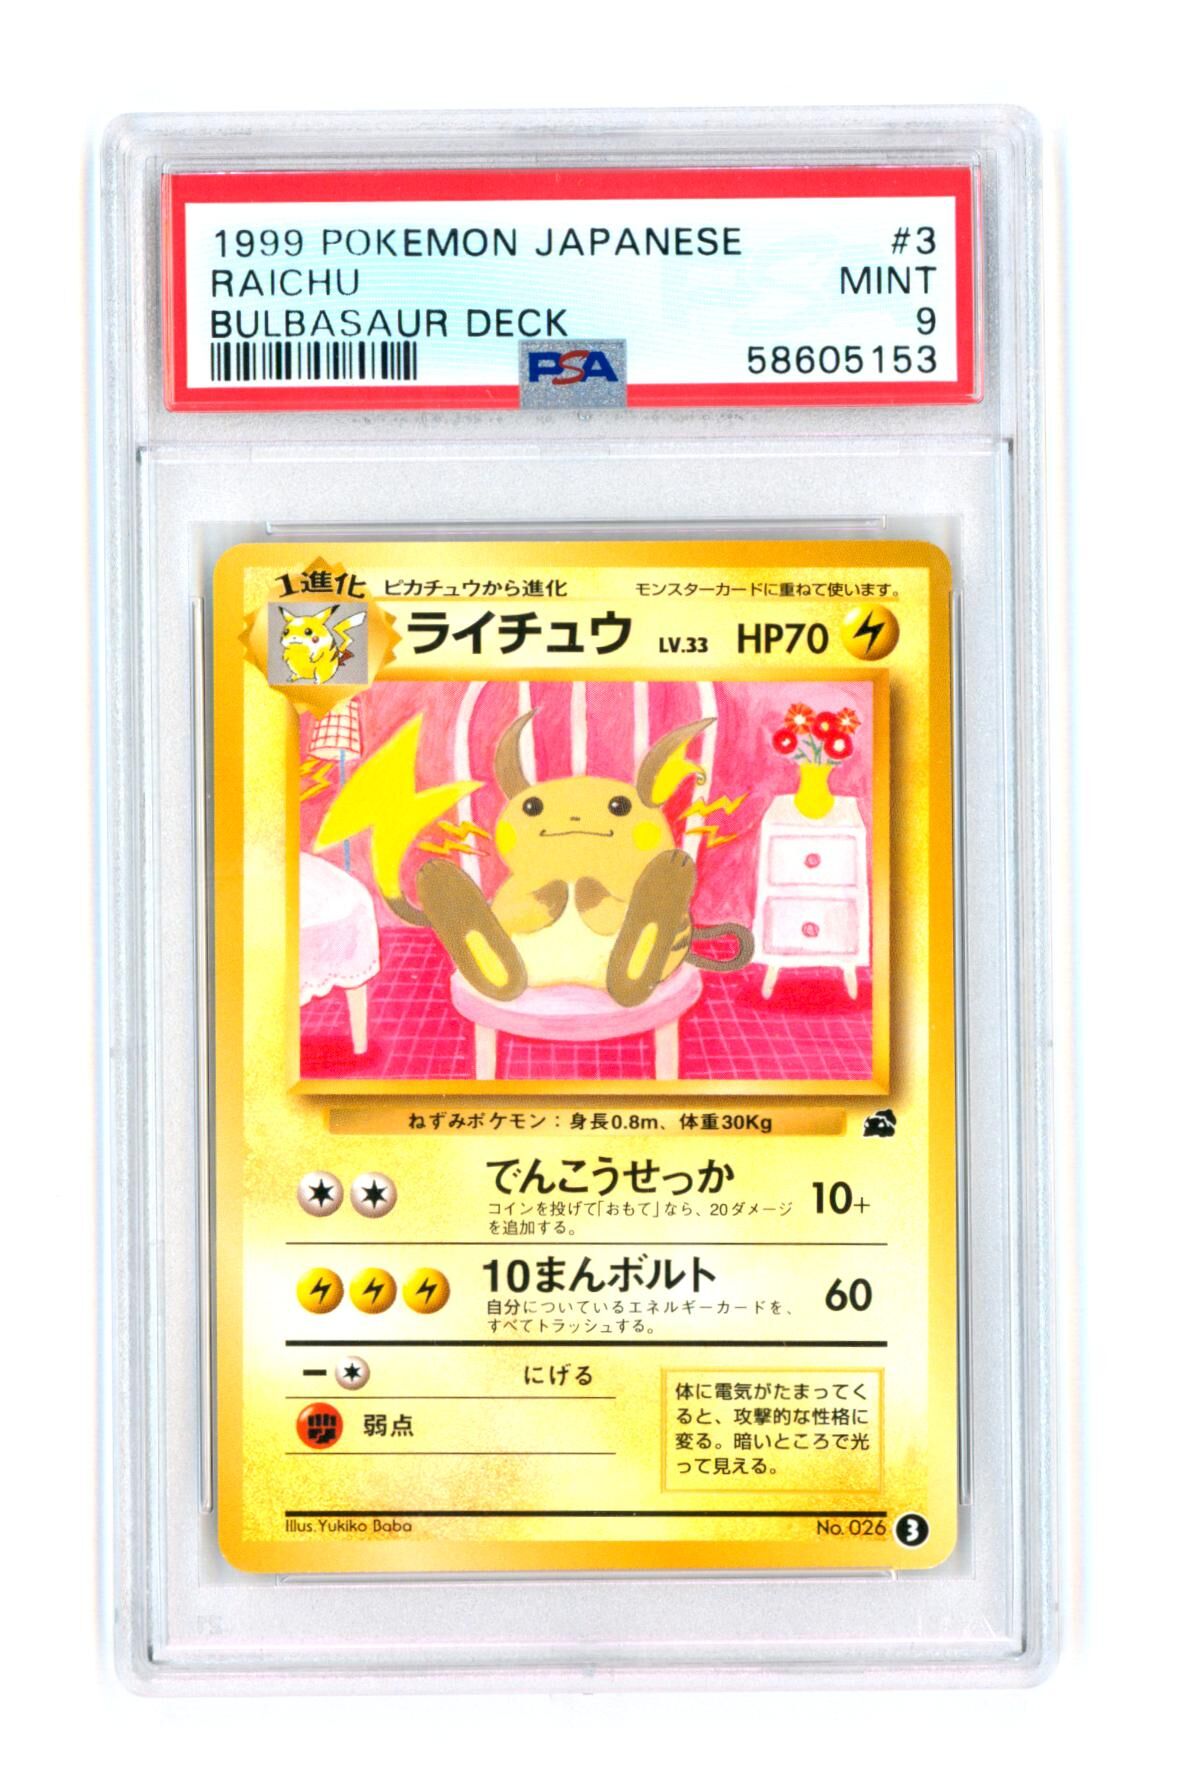 Raichu #3 - Bulbasaur Deck - Japanese - PSA 9 MINT - Pokémon